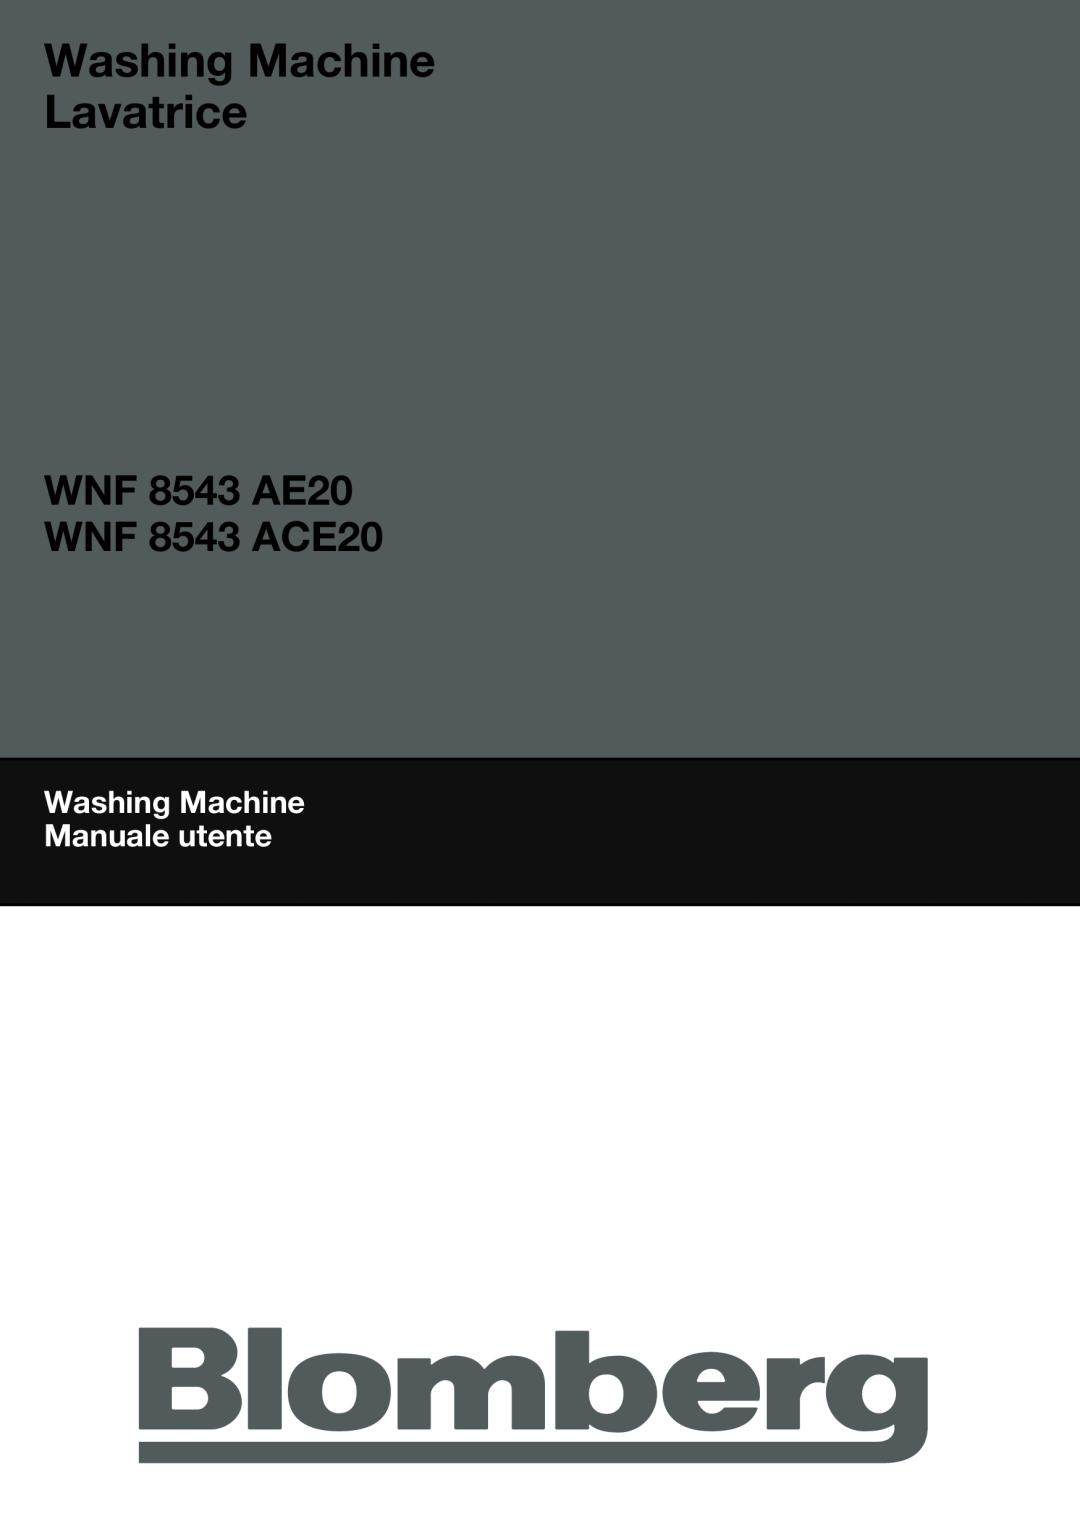 Blomberg manual Washing Machine Lavatrice, WNF 8543 AE20 WNF 8543 ACE20, Washing Machine Manuale utente 